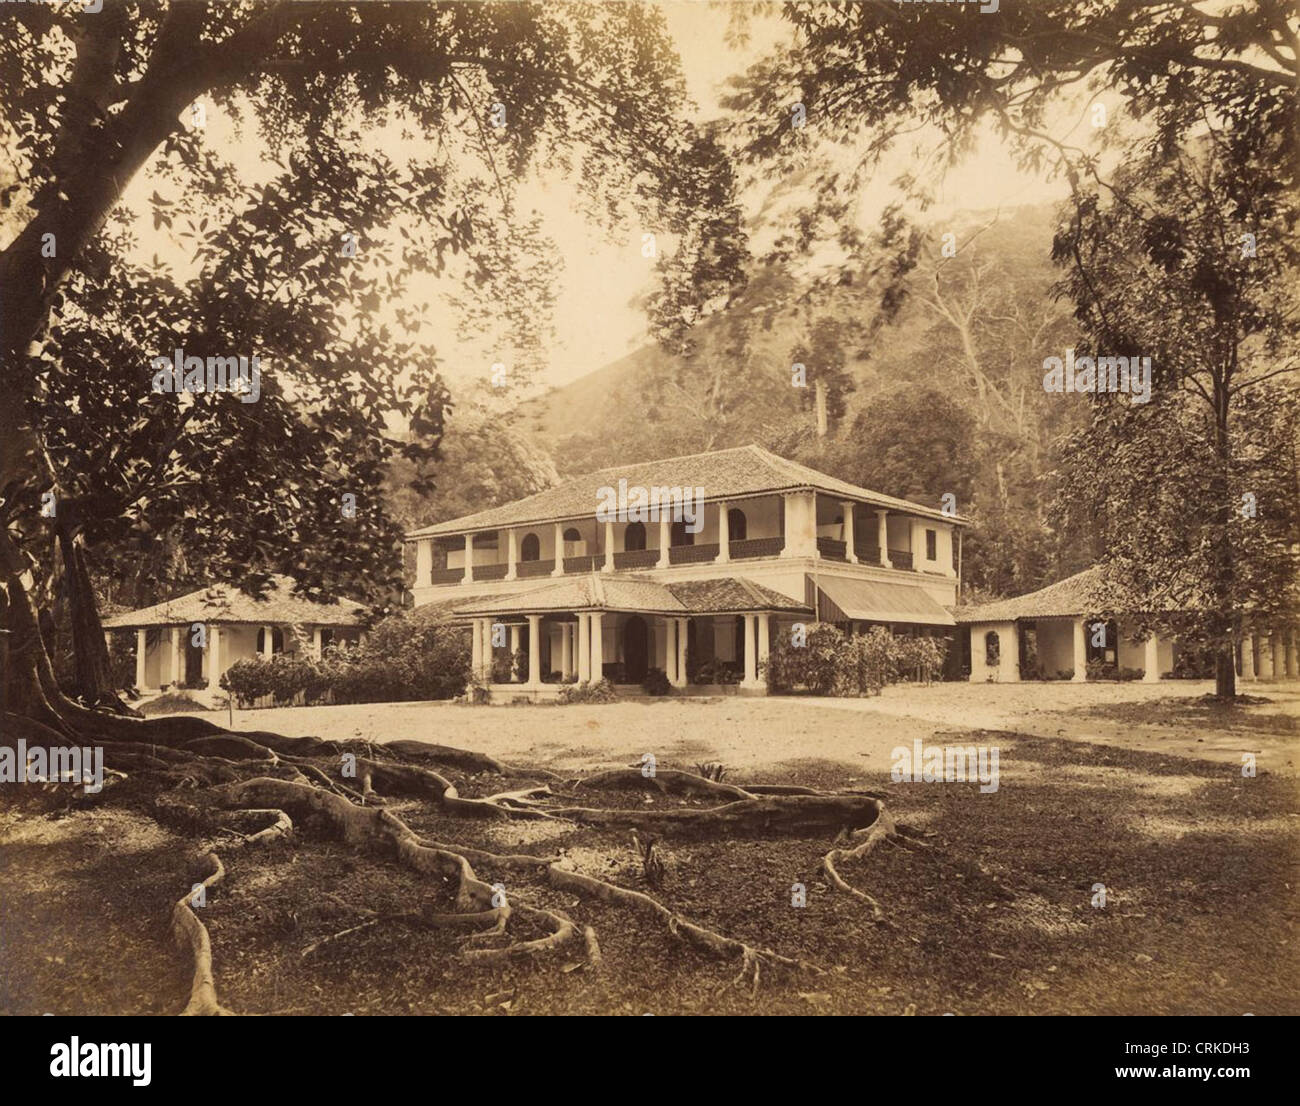 Espectacular casa de plantación colonial de estilo tropical Foto de stock